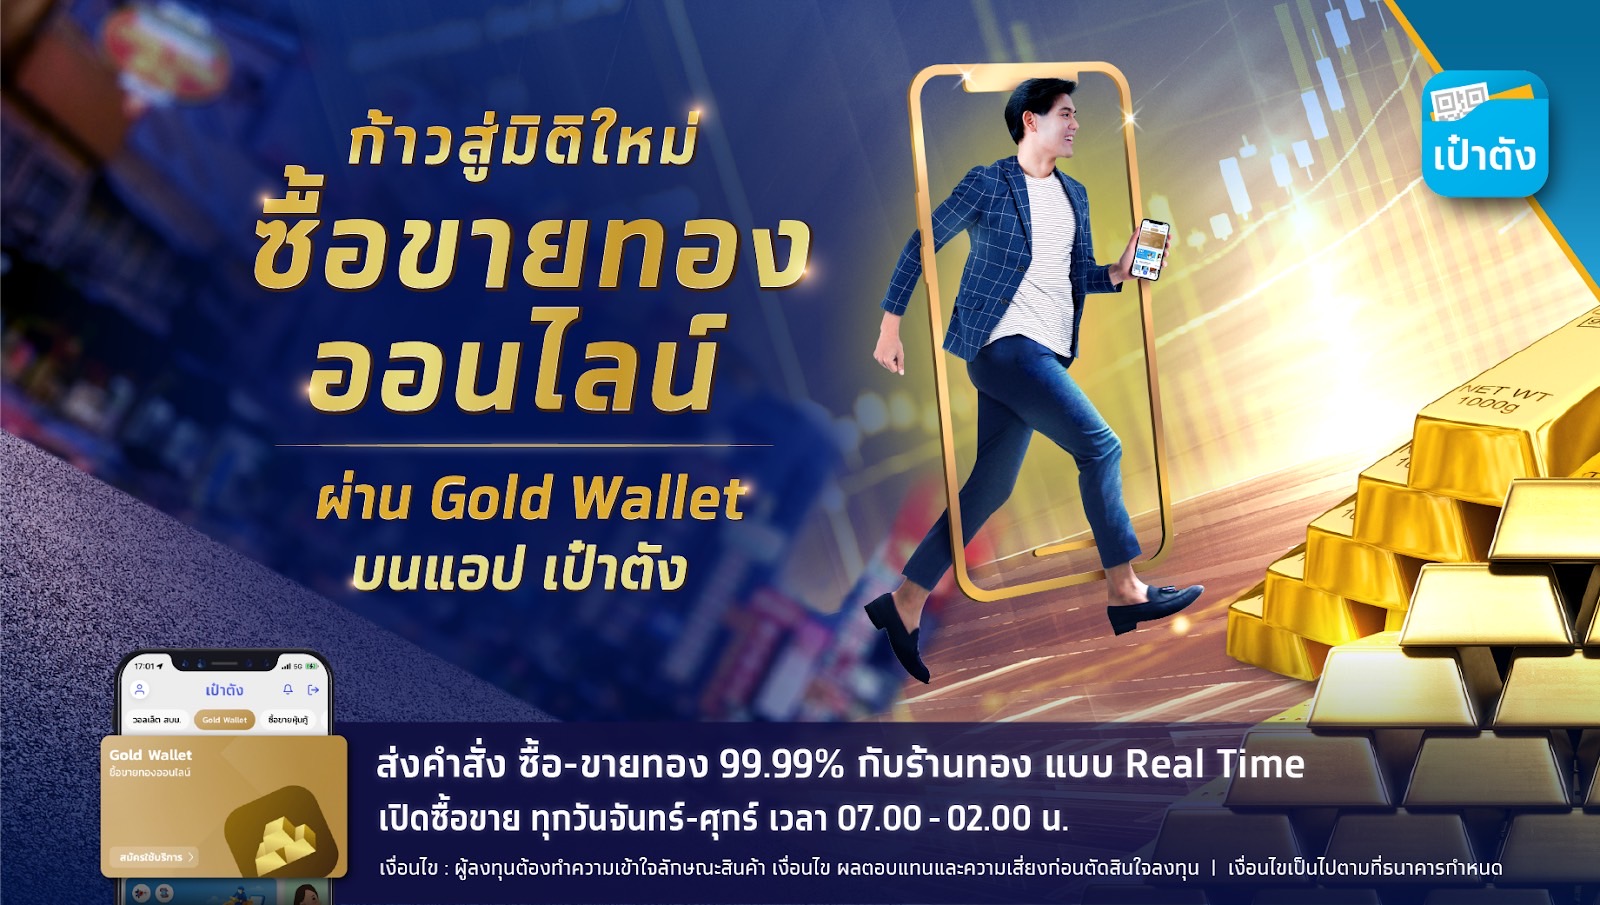 “Krungthai Gold Wallet” ตอบโจทย์ นักลงทุนเฮเปิดวอลเล็ตซื้อขายทองบน “เป๋าตัง” 12,000 ราย ยอดซื้อขายกว่า 500 ล้านบาท